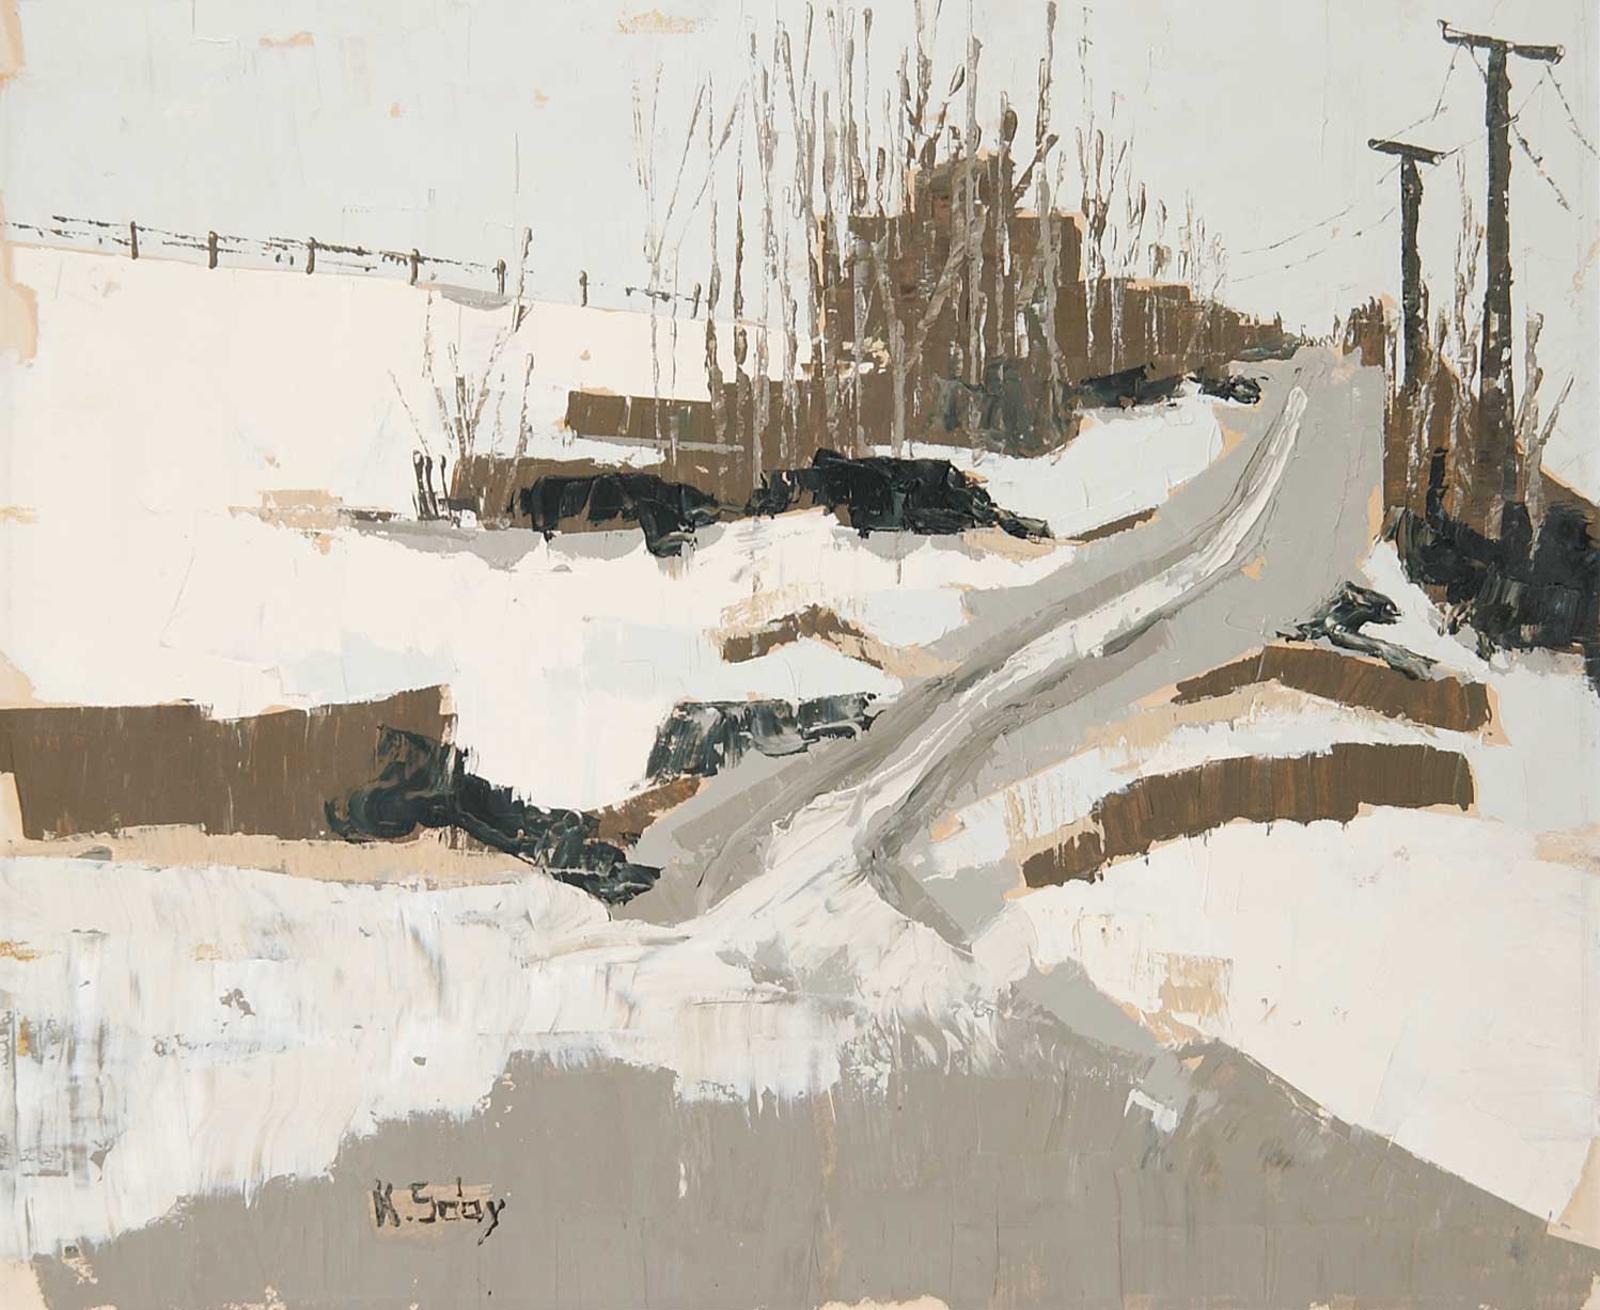 K. Soby - Untitled - Winter Road